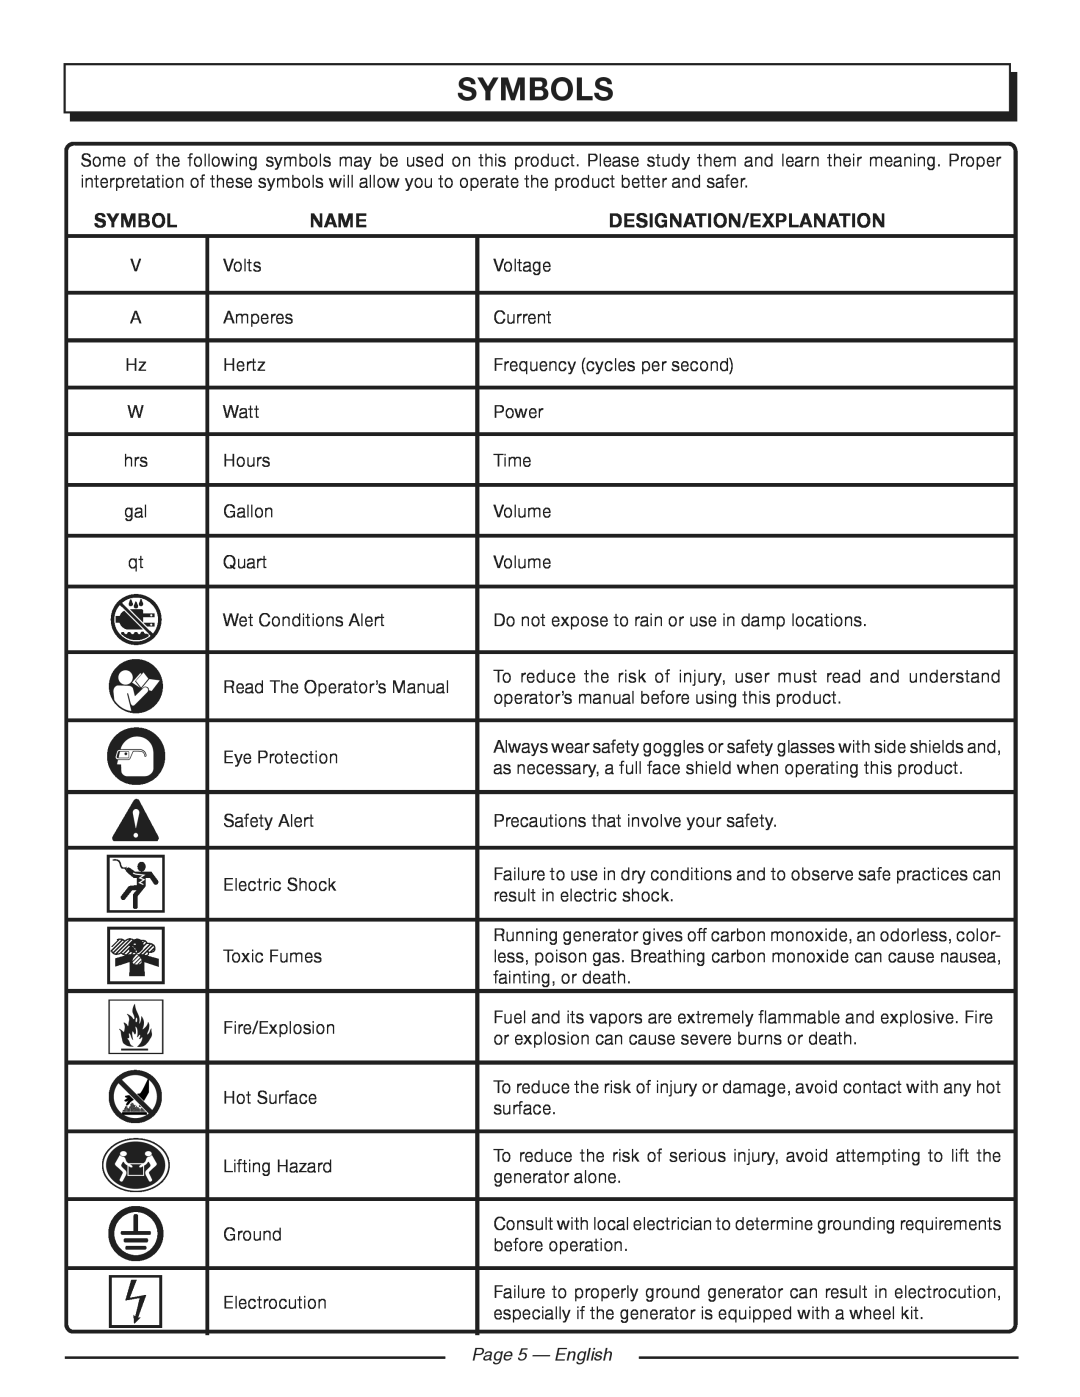 Homelite HG5700 manuel dutilisation Symbols, Name, Designation/Explanation, Page  - English 